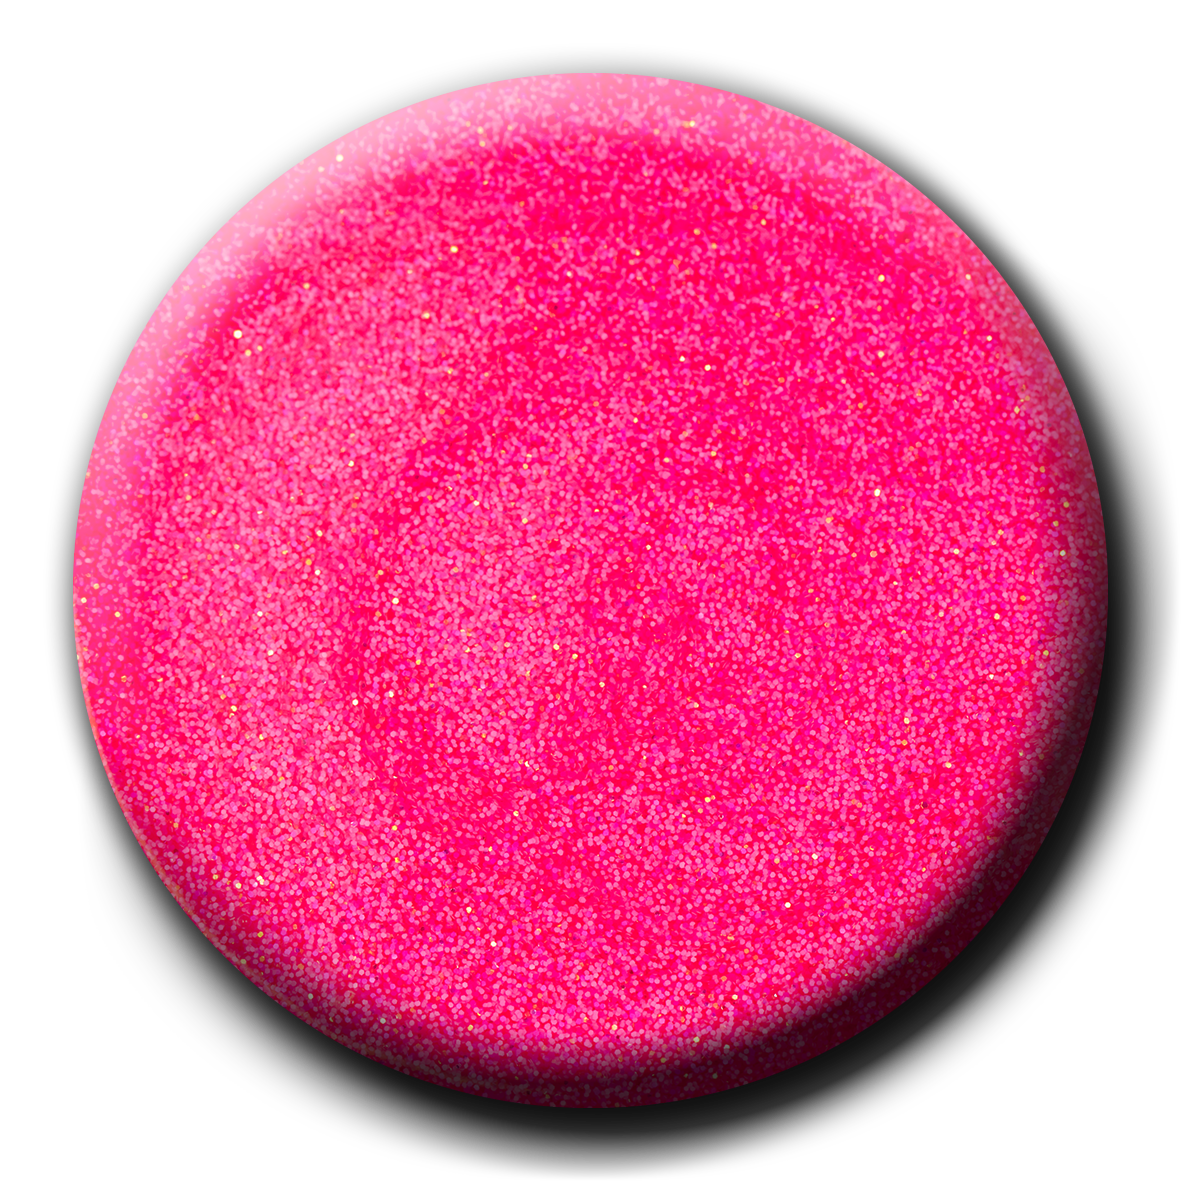 Light Elegance P+ Soak Off Glitter Gel - Pinch Me Pink - Creata Beauty - Professional Beauty Products